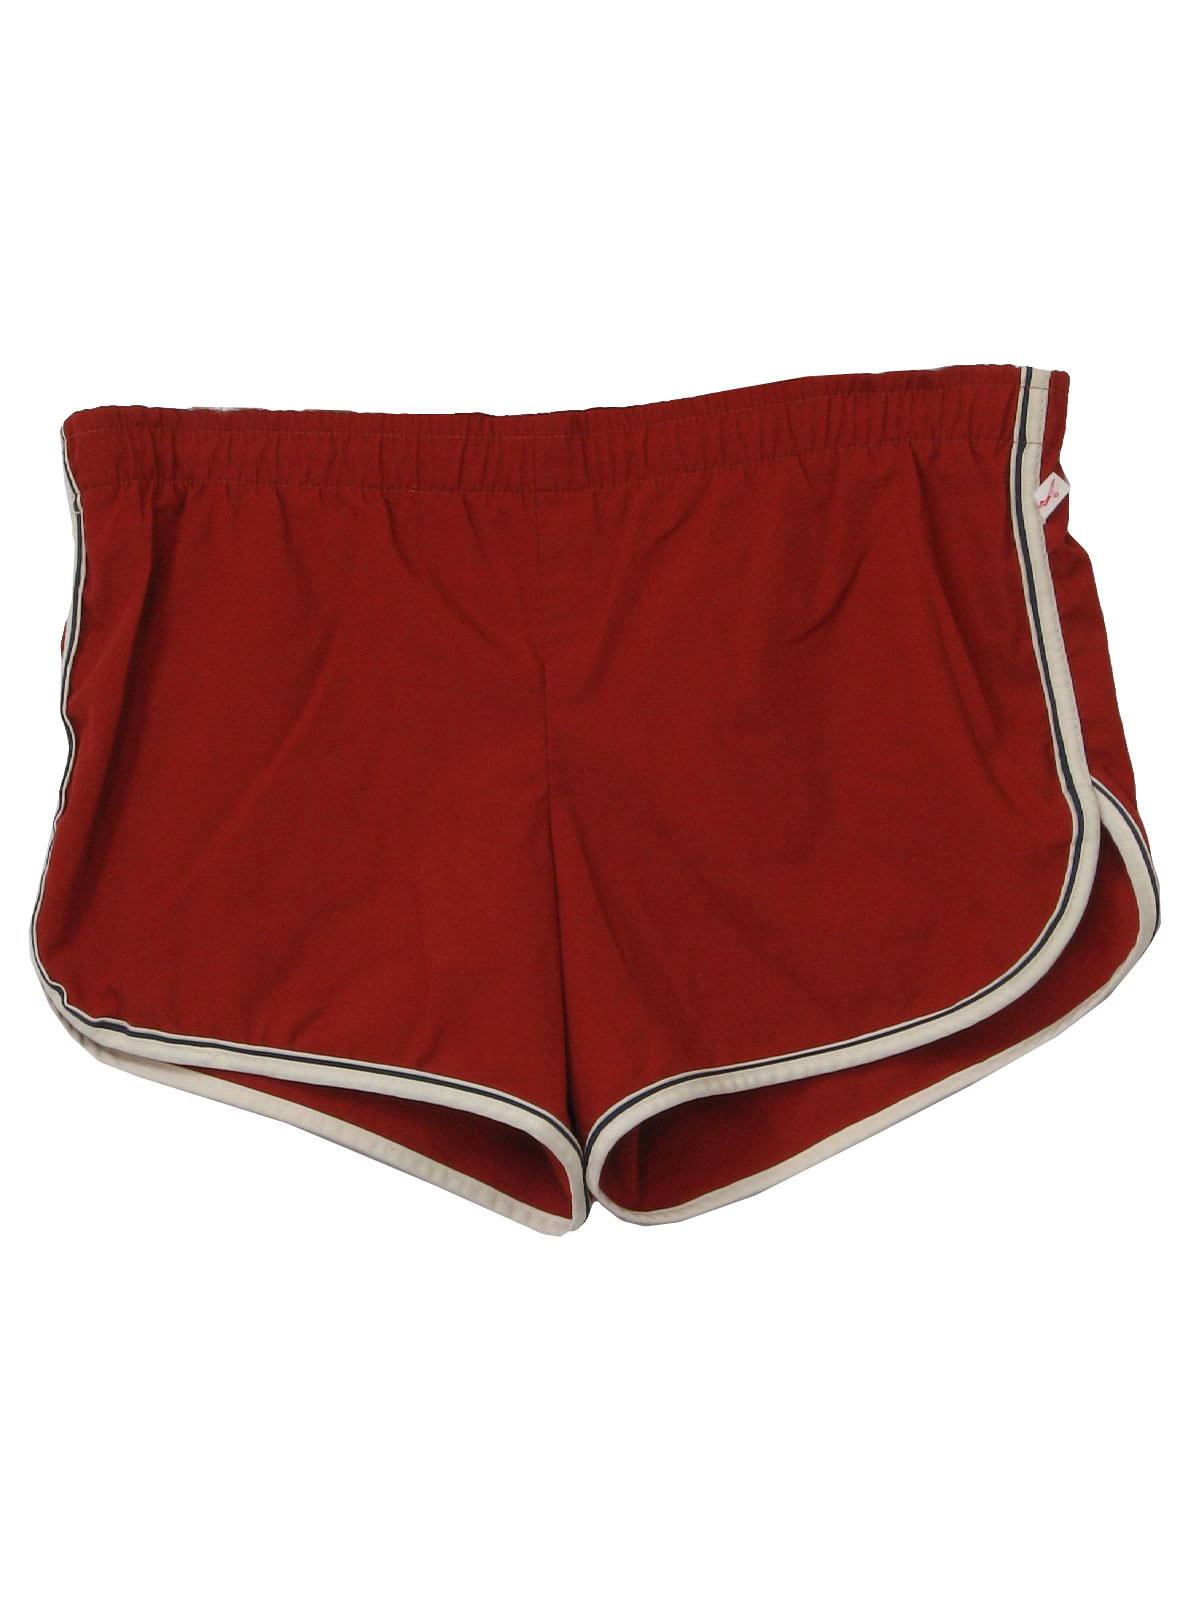 Vintage Jantzen 1970s Shorts: 70s -Jantzen- Mens rust red polyester and ...